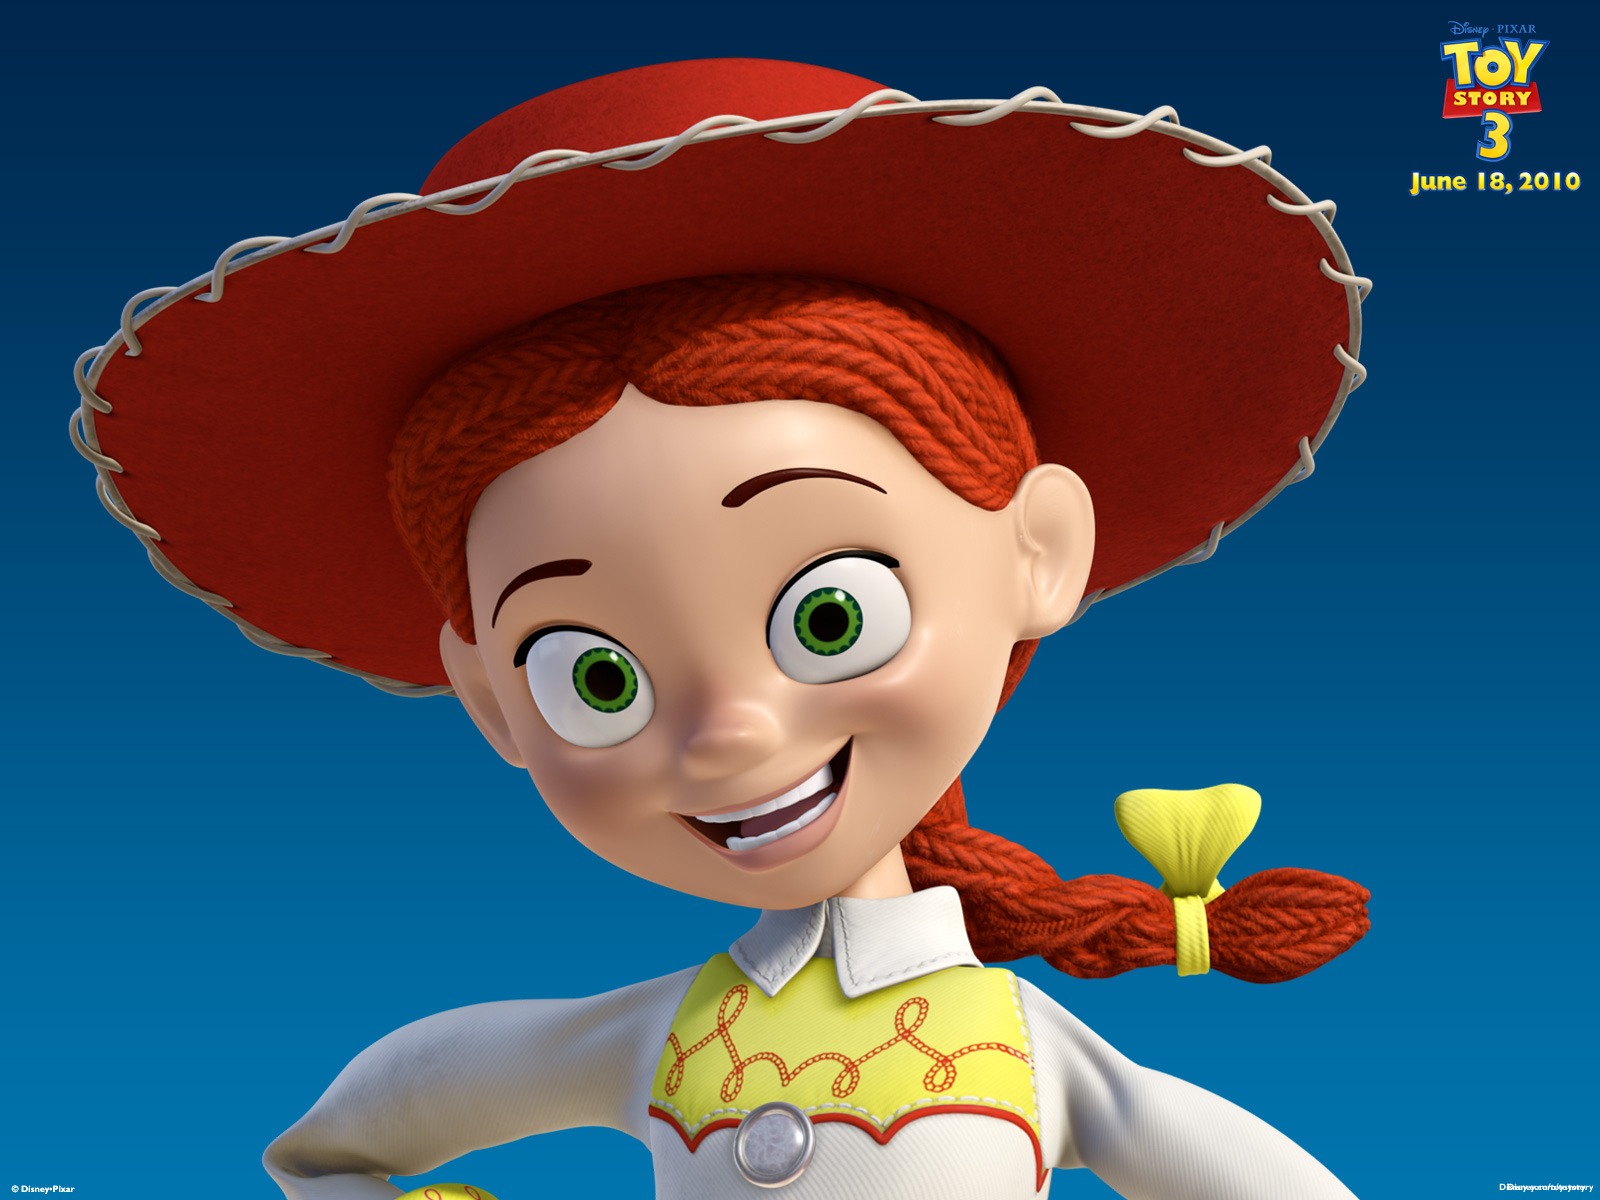 "Toy Story 3" desktop wallpaper number 3 (1600 x 1200 pixels)